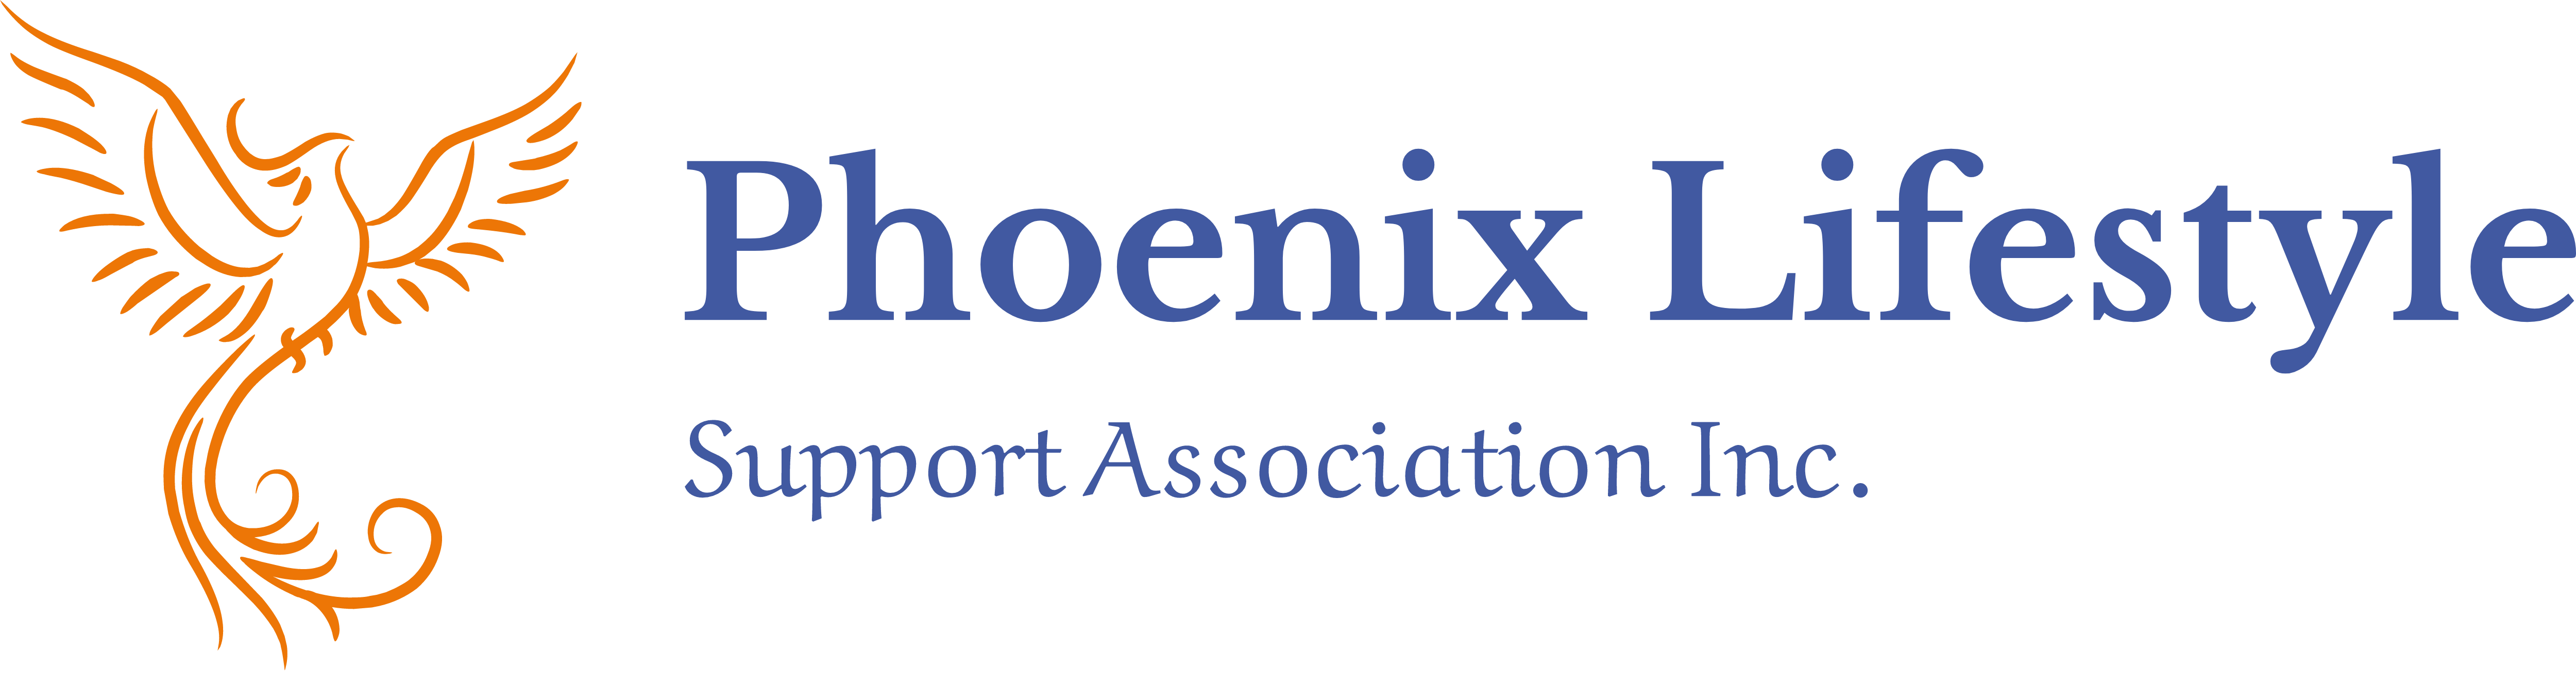 Phoenix Lifestyle Support Association logo